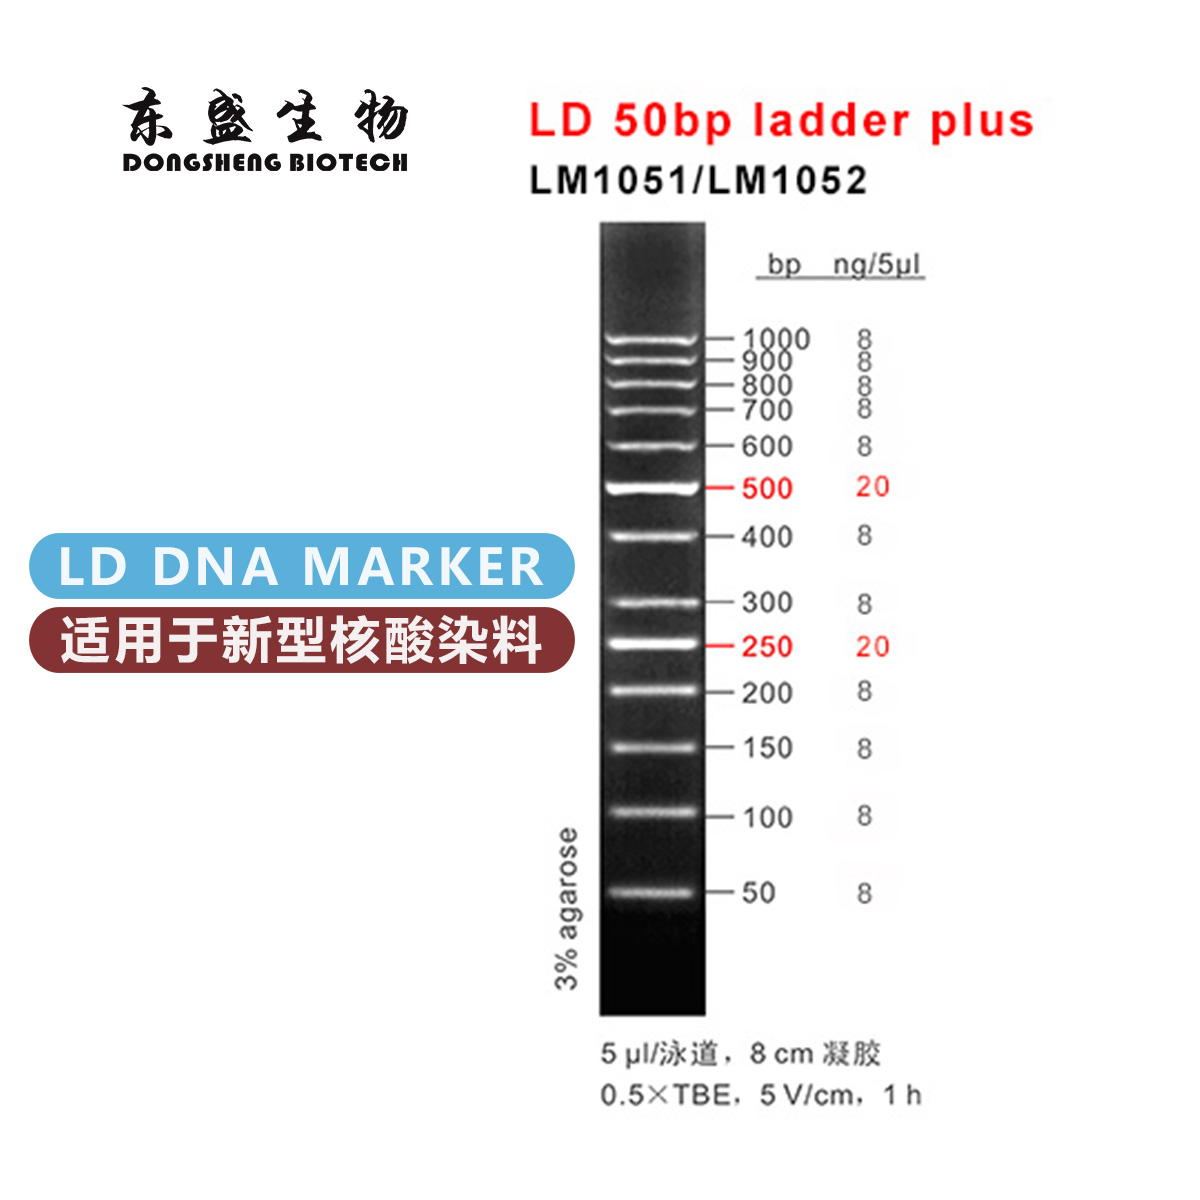 东盛LD 50bp ladder plus 新型染料专用DNA Marker (LM1051-LM1052)